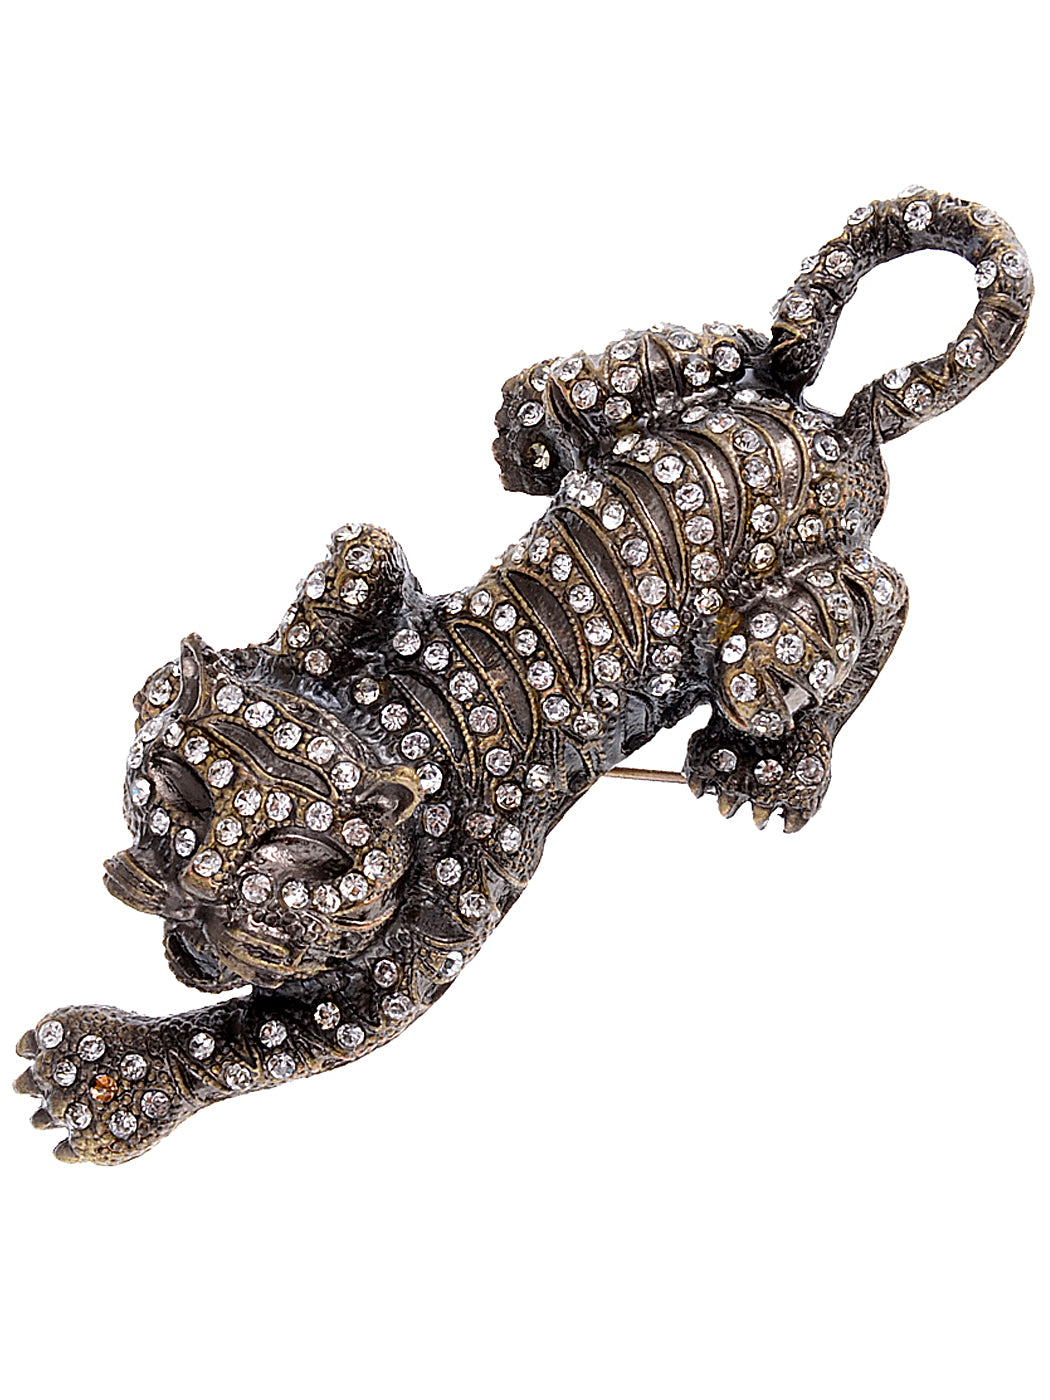 Antique Crouching Tiger Animal Brass Pin Brooch